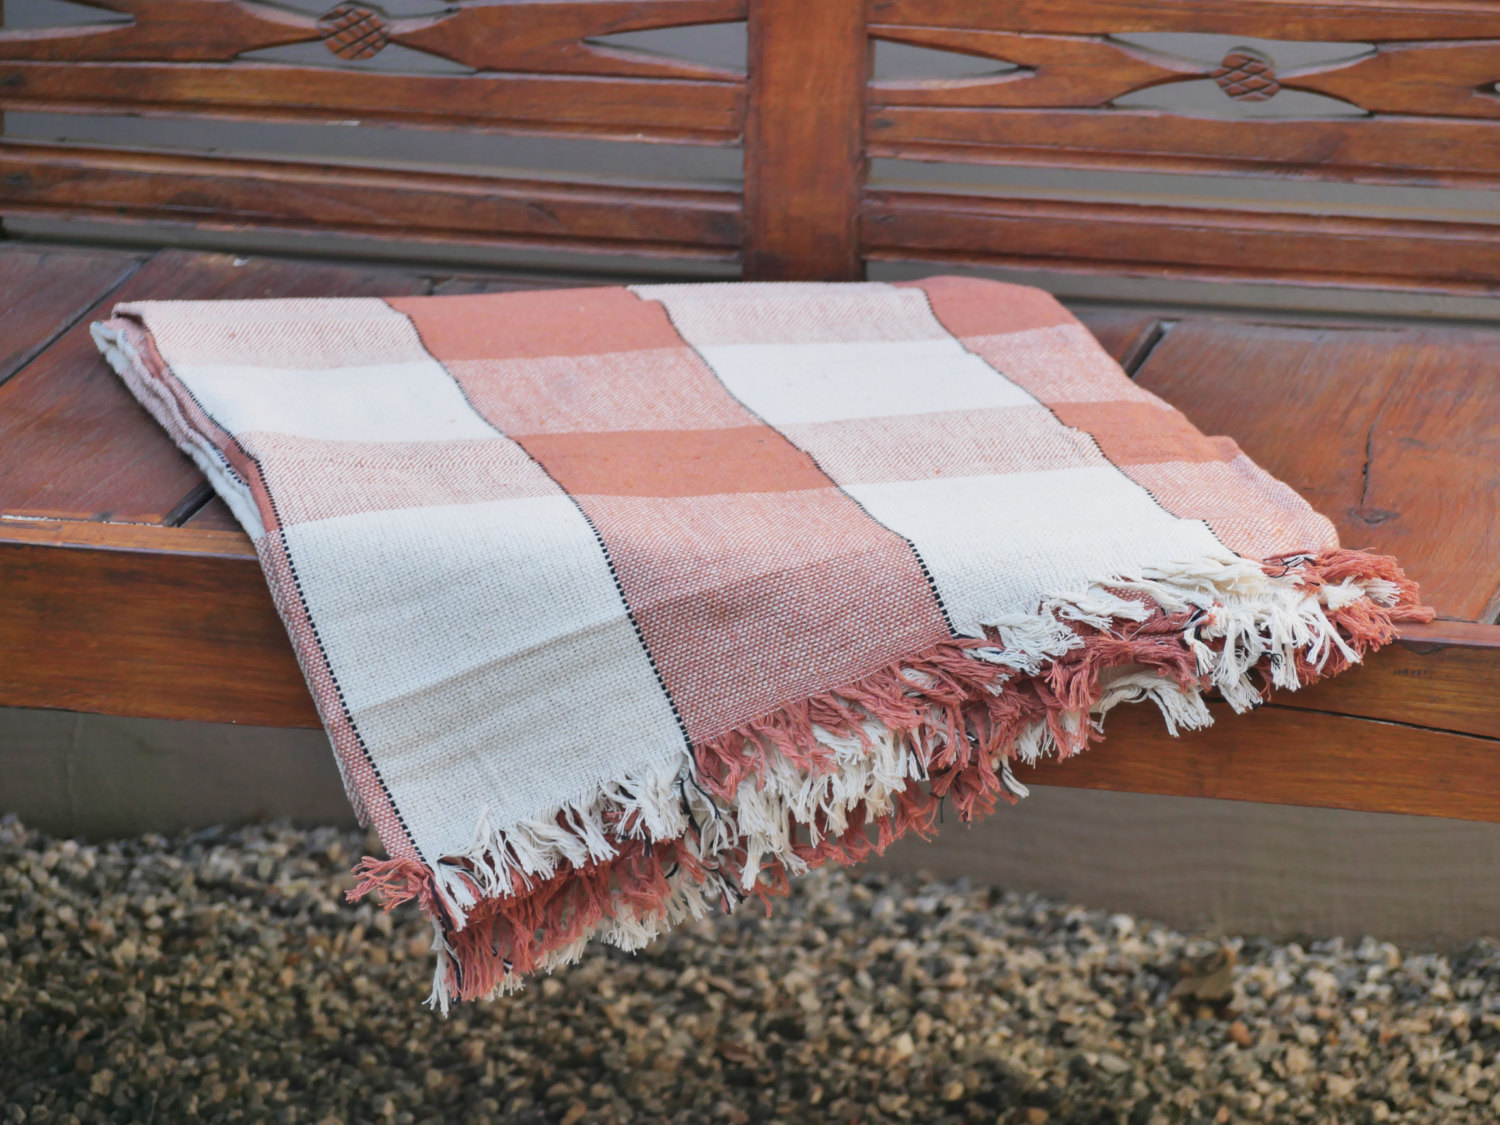 Hand Woven Cotton Throw Blanket in Orange and Beige Plaid - $49.60